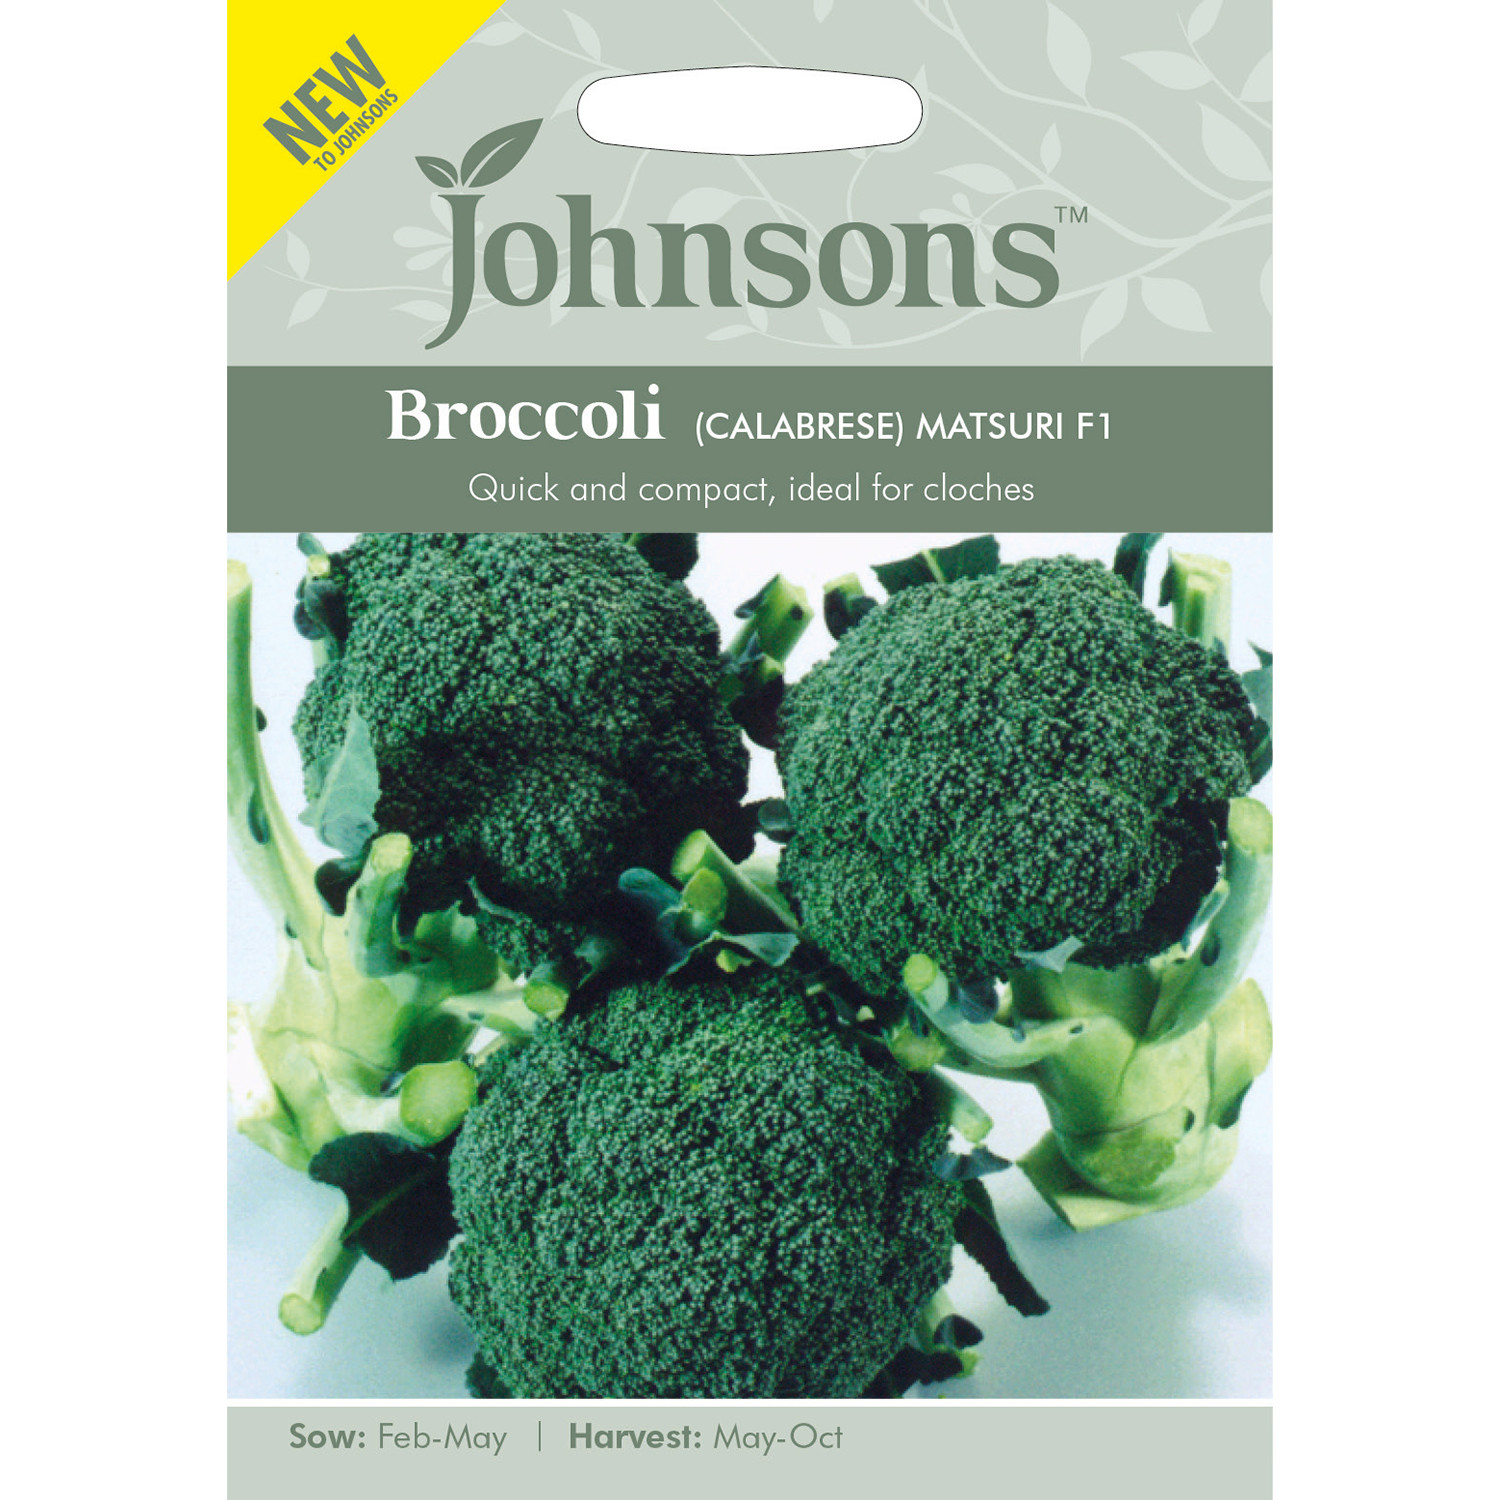 Johnsons Calabrese Matsuri F1 Broccoli Seeds Image 2